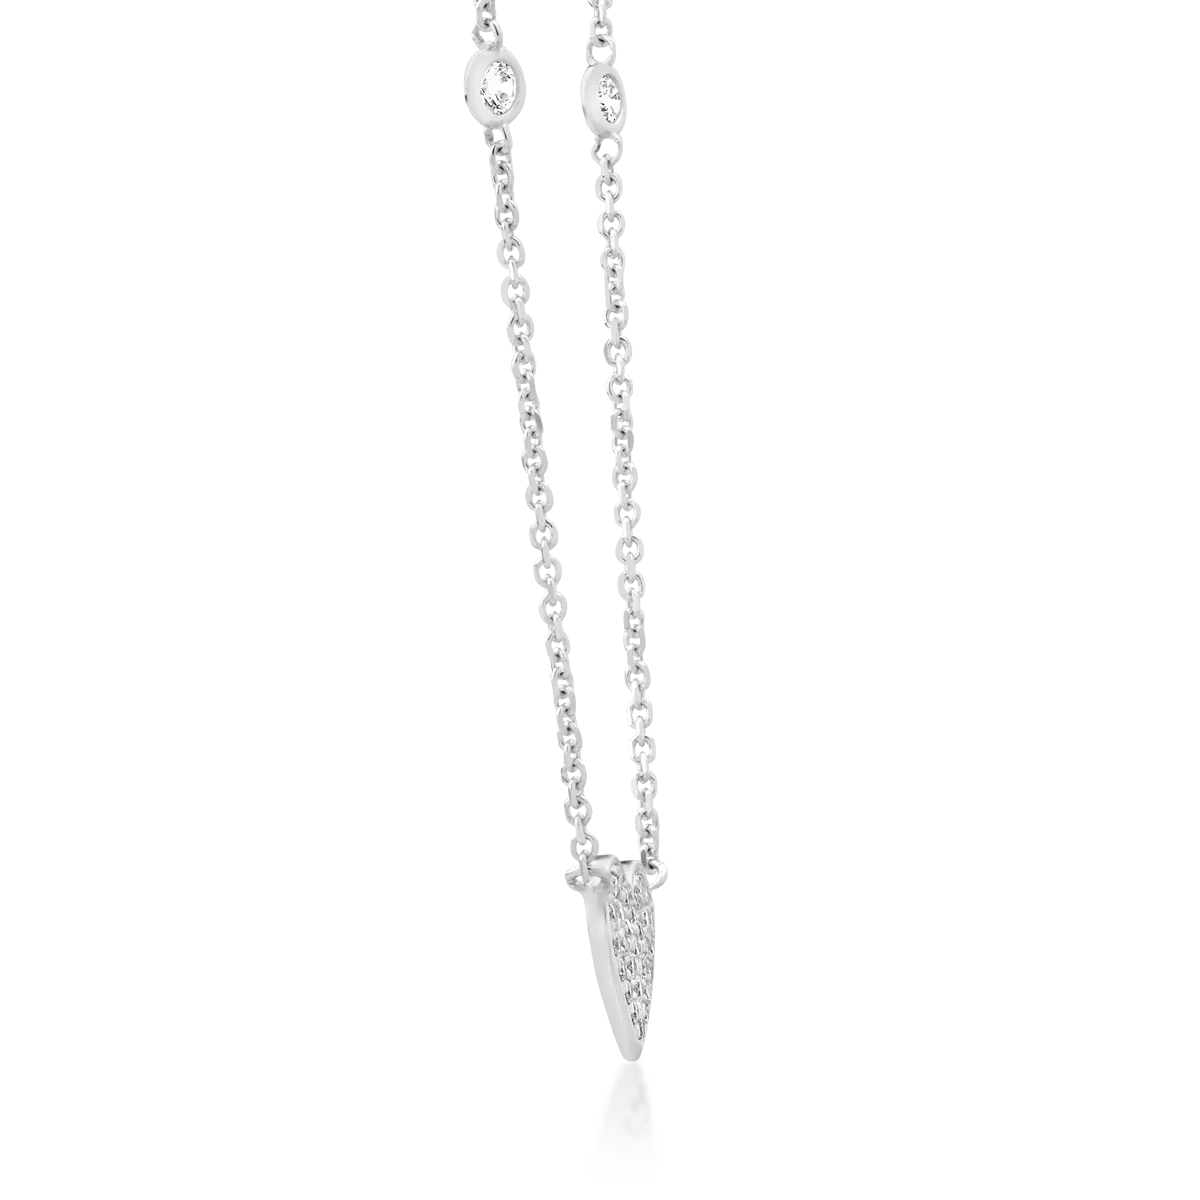 White gold heart pendant chain with microsetting zirconia